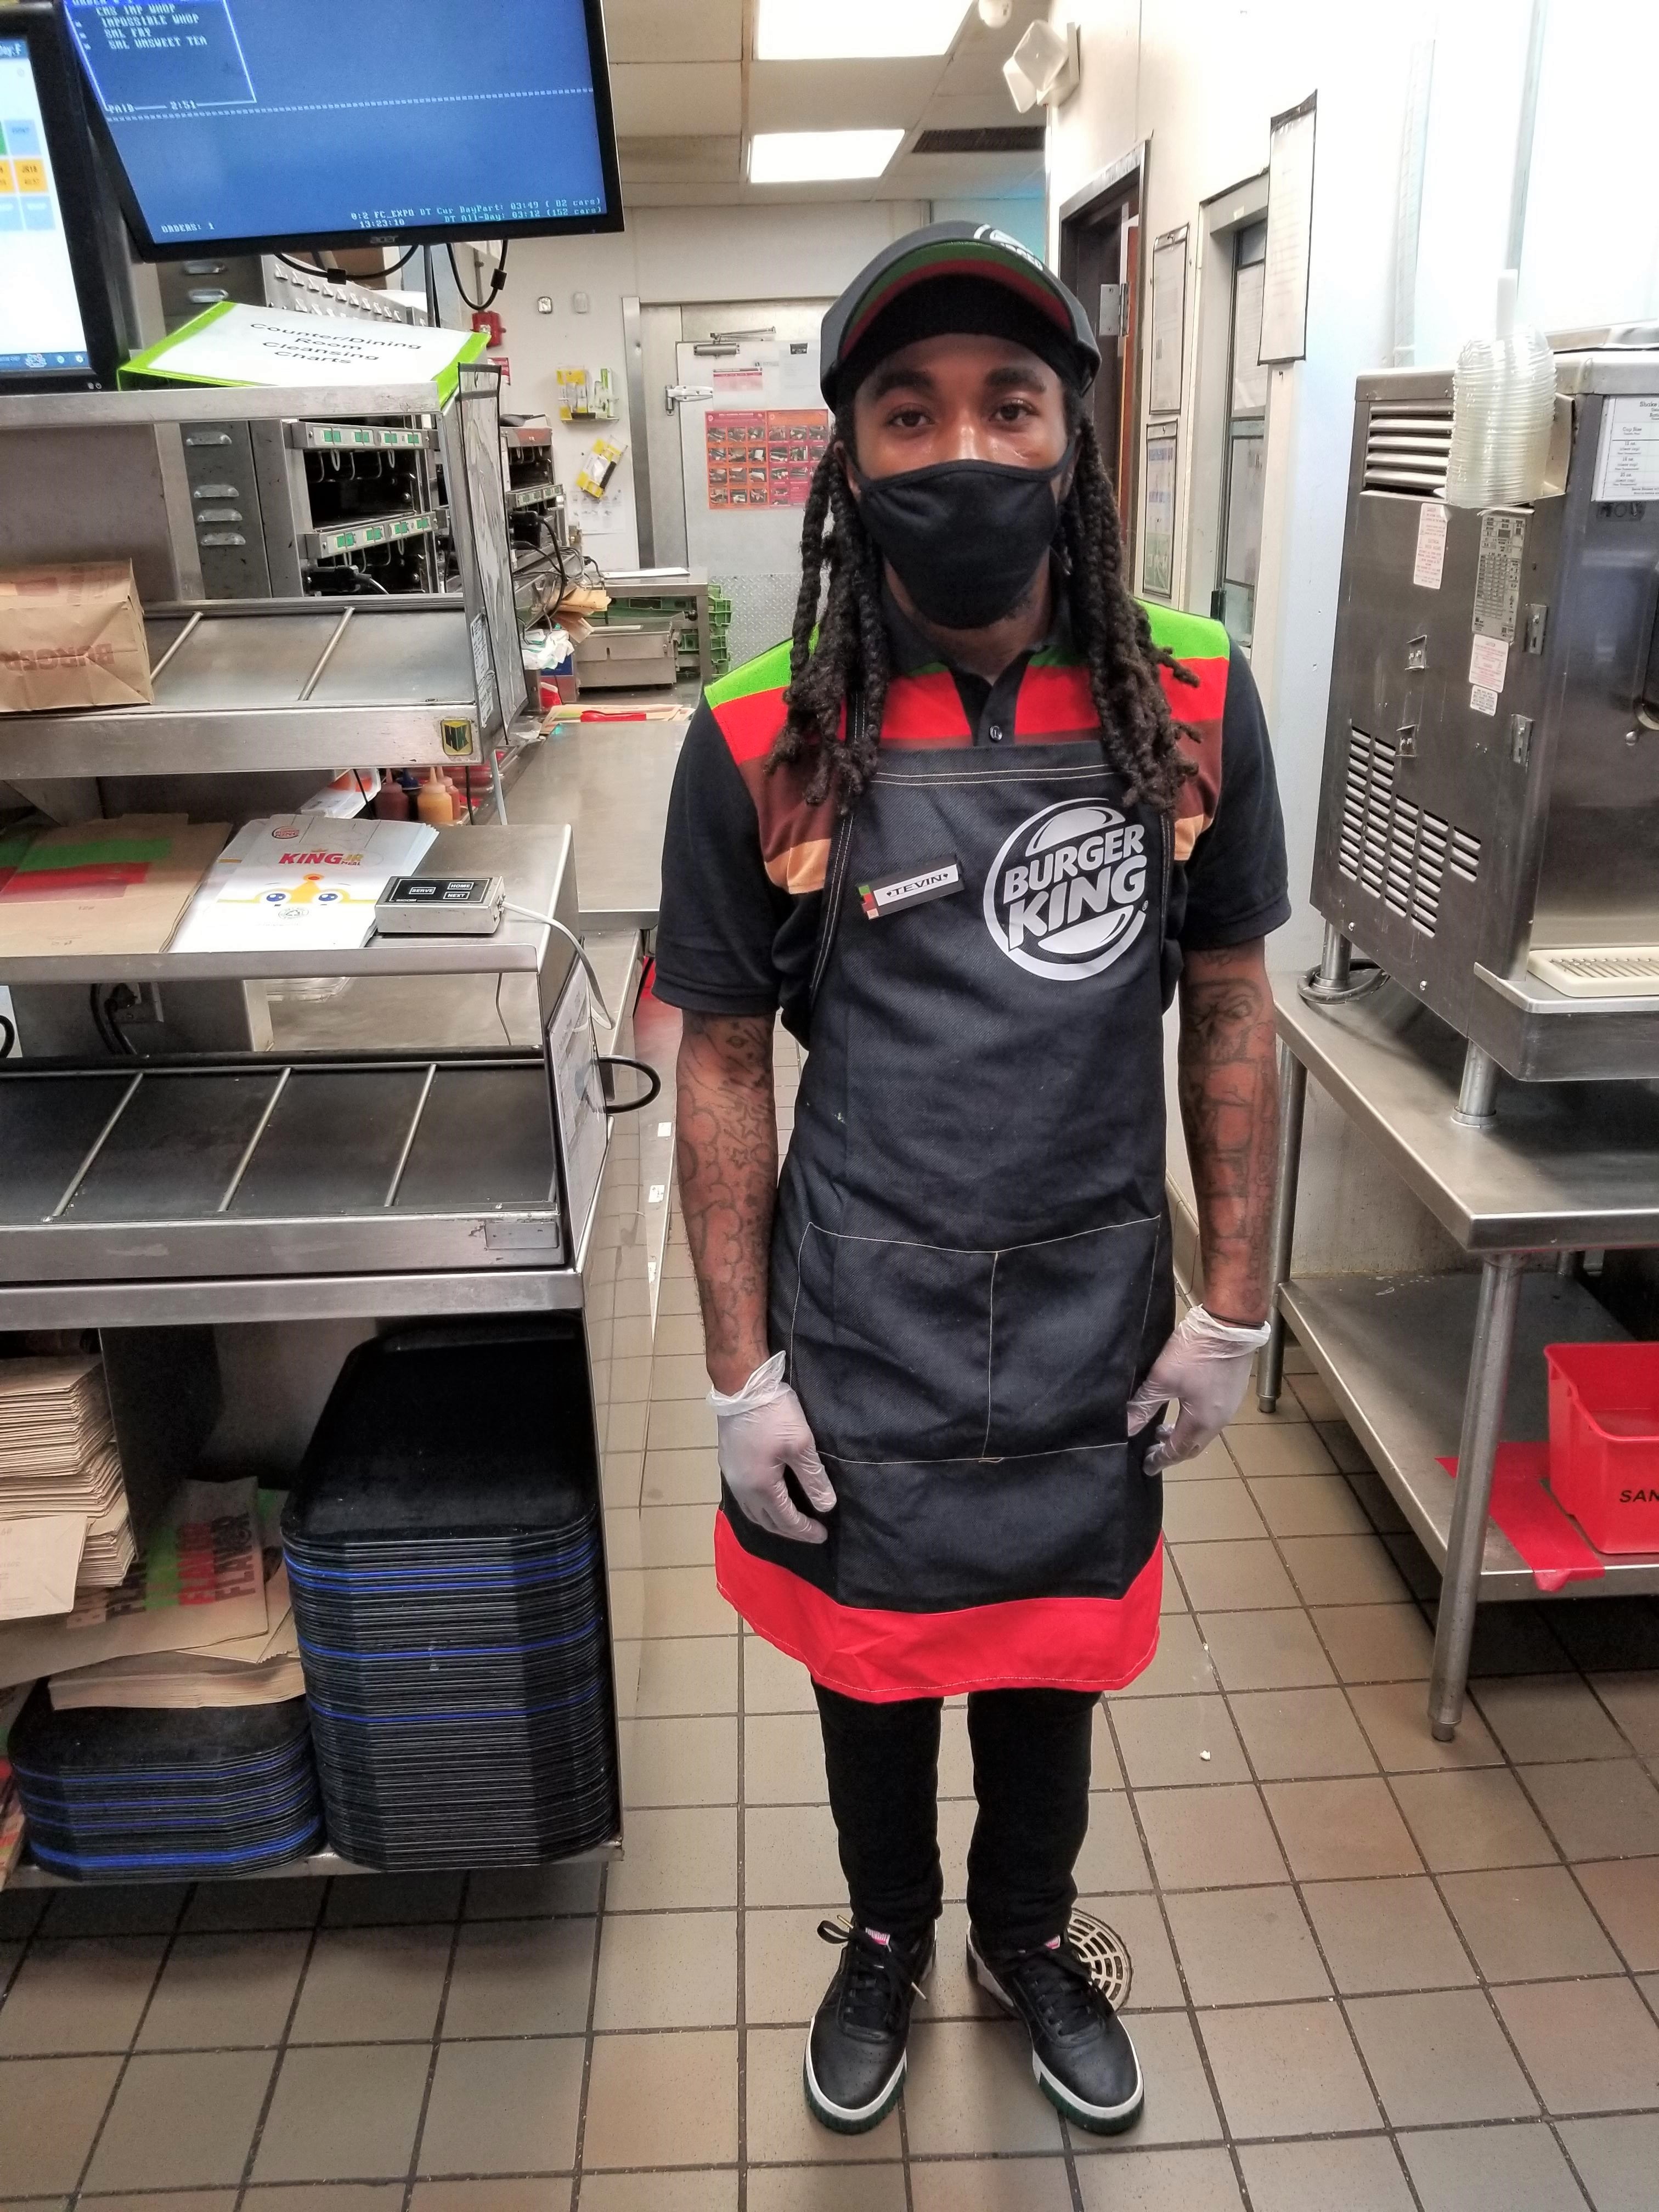 uudgrundelig Uden tetraeder TOMS King Services on Twitter: "Rochambeau employees are dressed to  impress! Great job guys! #burgerking #tomsking #virginia #dresstoimpress # uniform #nowhiring #applynow https://t.co/pVh7u1N6r1" / Twitter